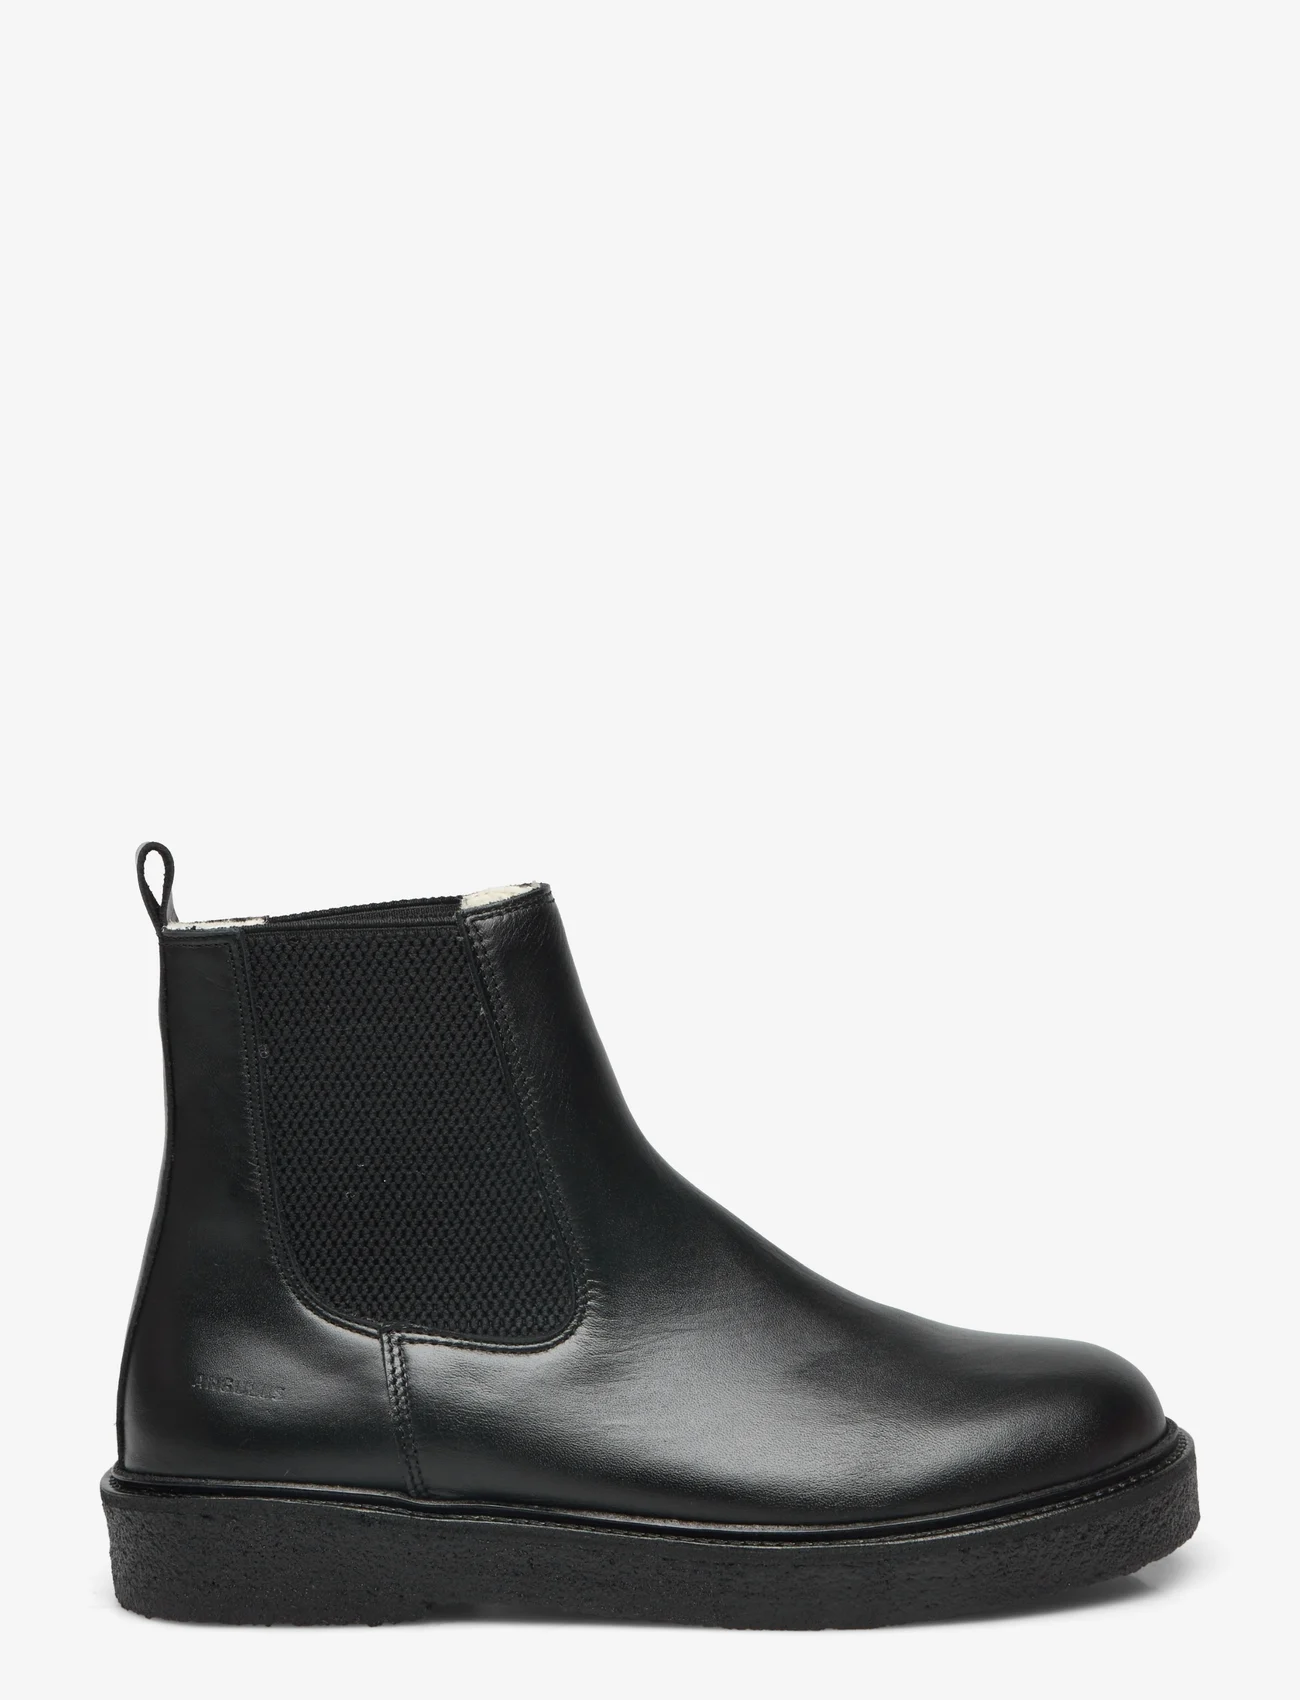 ANGULUS - Boots - flat - chelsea stila zābaki - 1604/053 black/black - 1